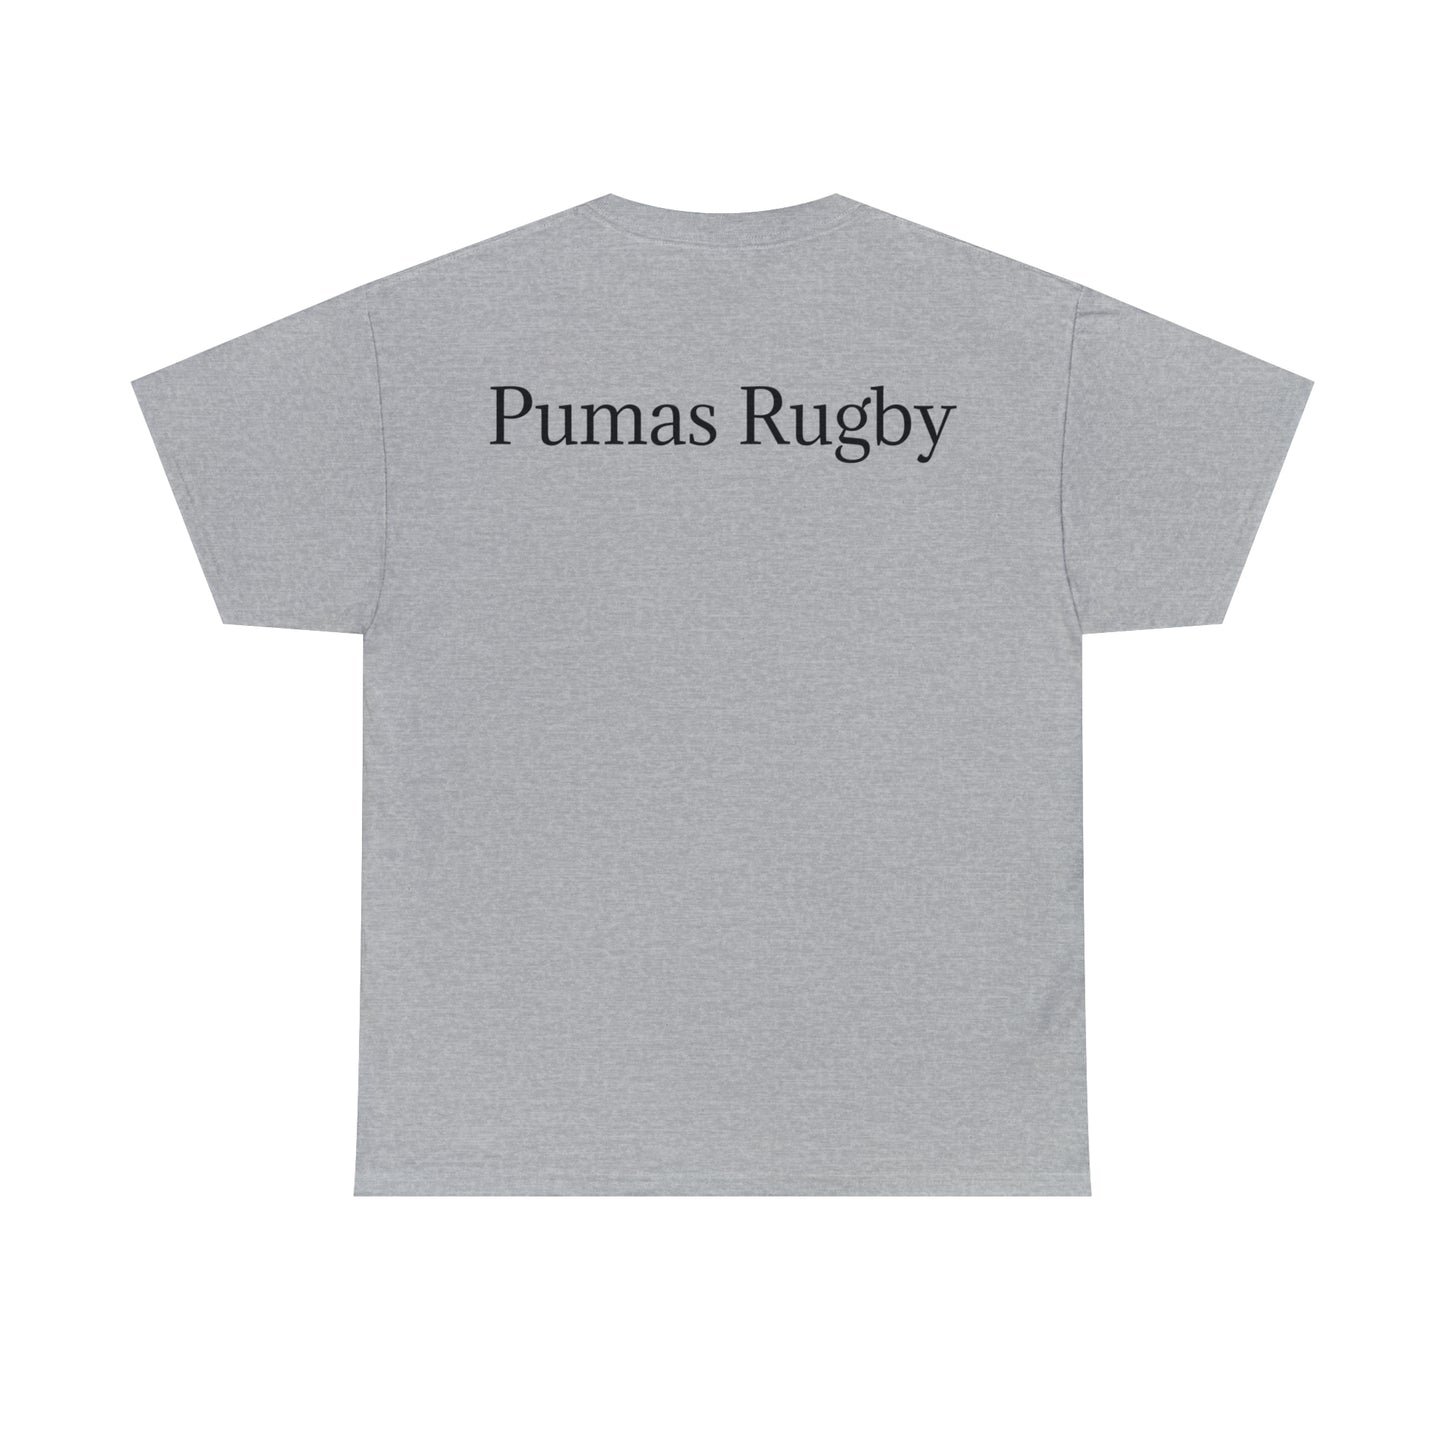 Pumas RWC photoshoot - light shirts